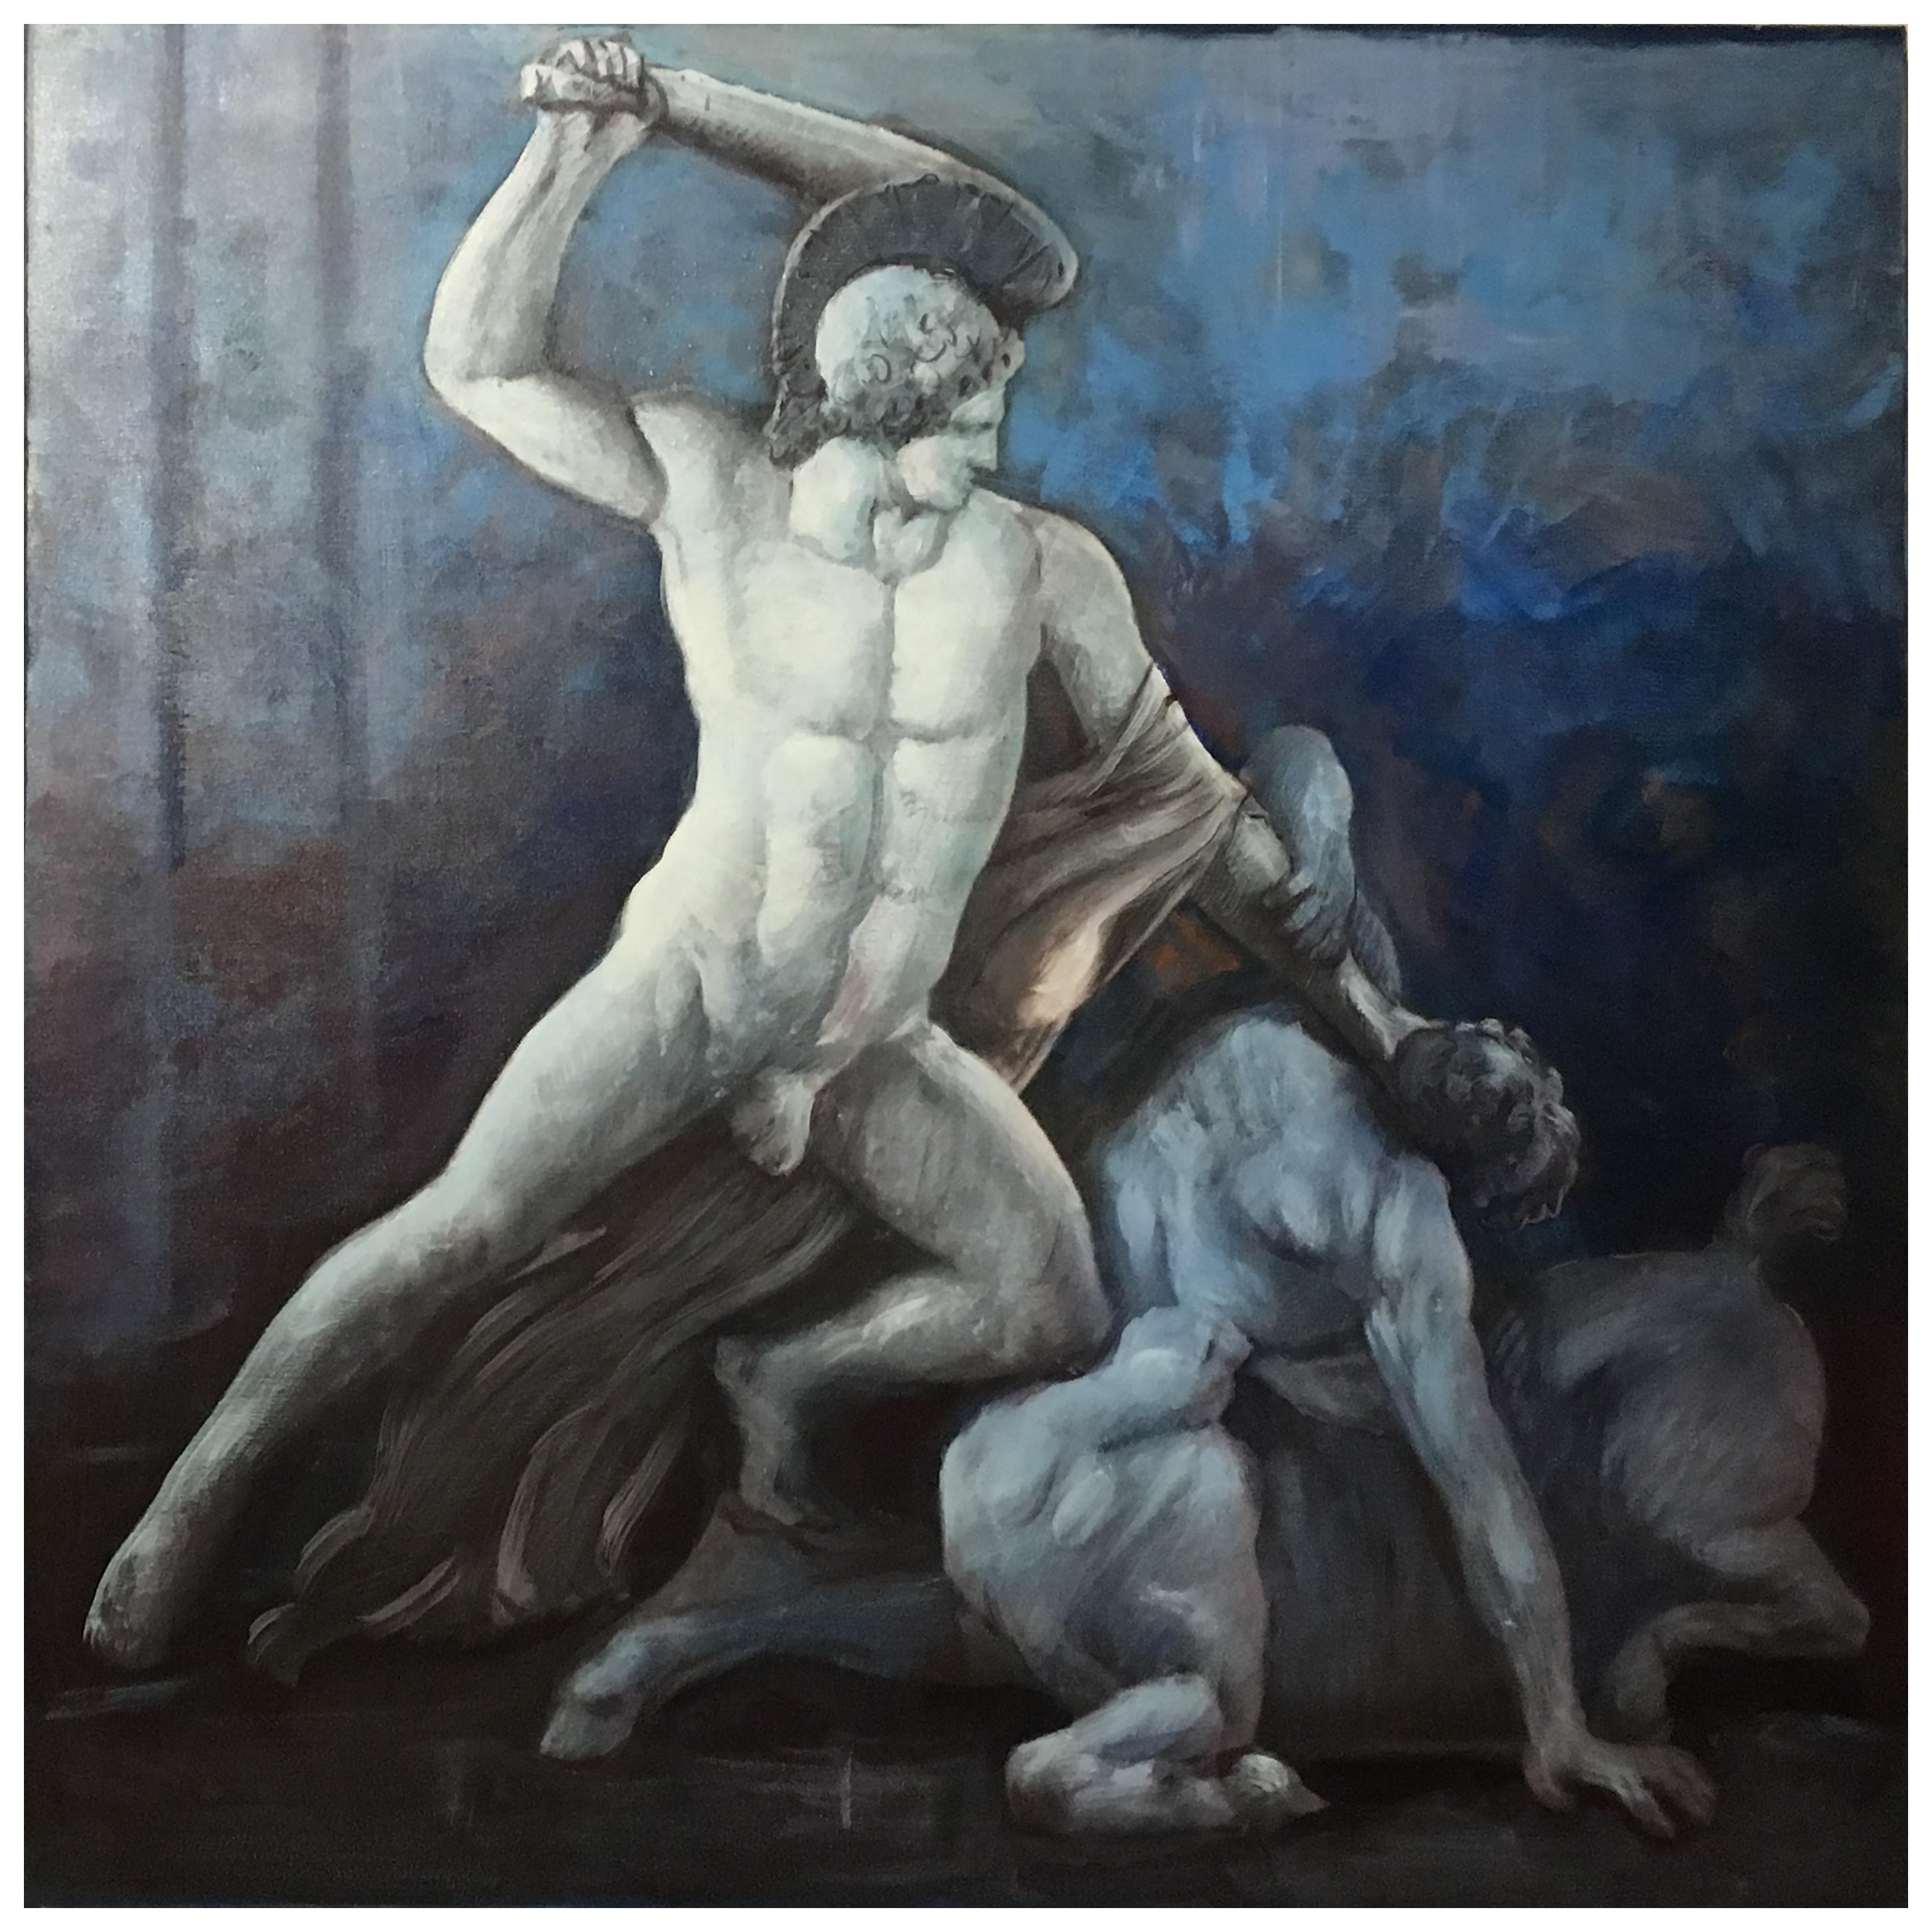 MYTHOLOGICAL SCENE- Italian School - Oil on canvas Painting.